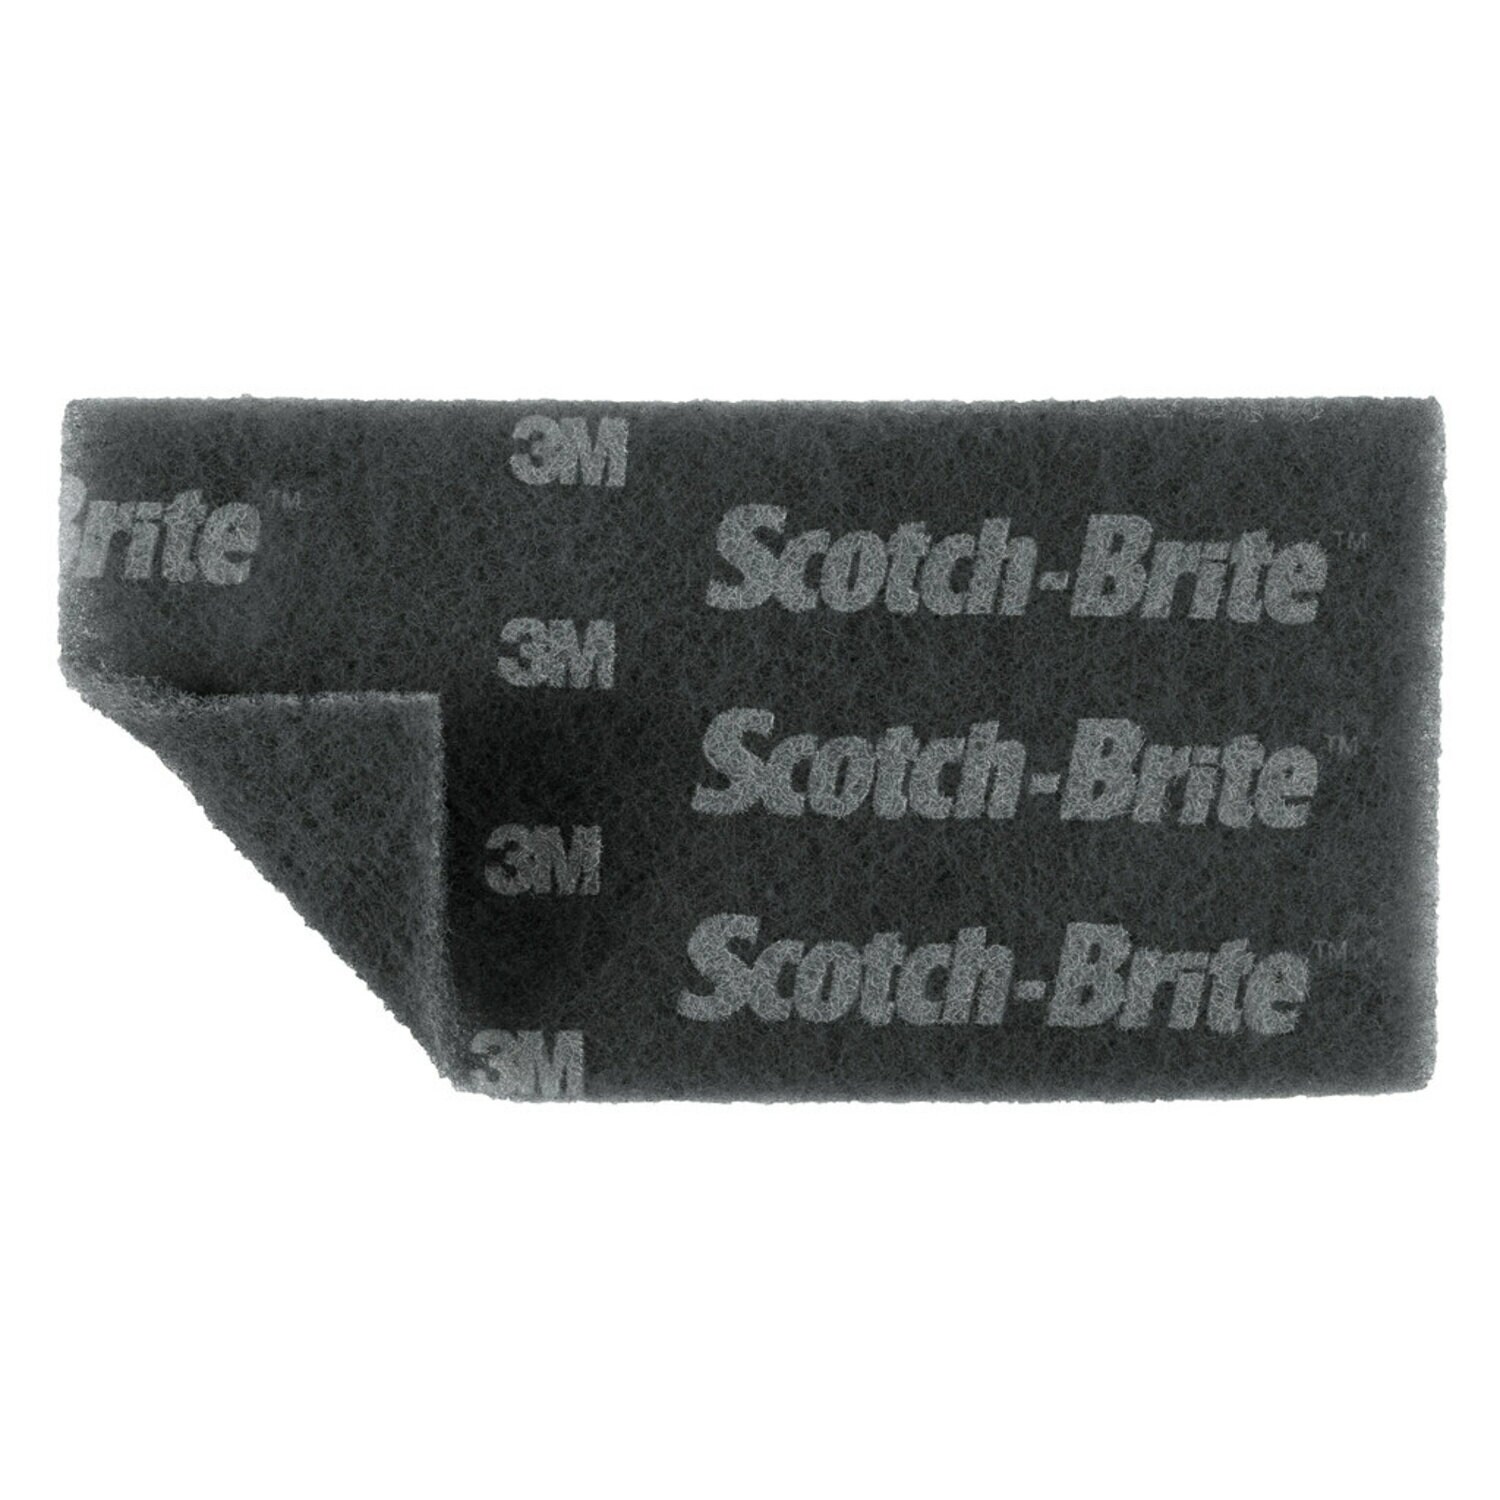 7100042335 - Scotch-Brite Durable Flex Hand Pad, MX-HP, SiC Ultra Fine, Gray, 4-1/2 in x 9 in, 25/Carton, 4 Cartons/Case